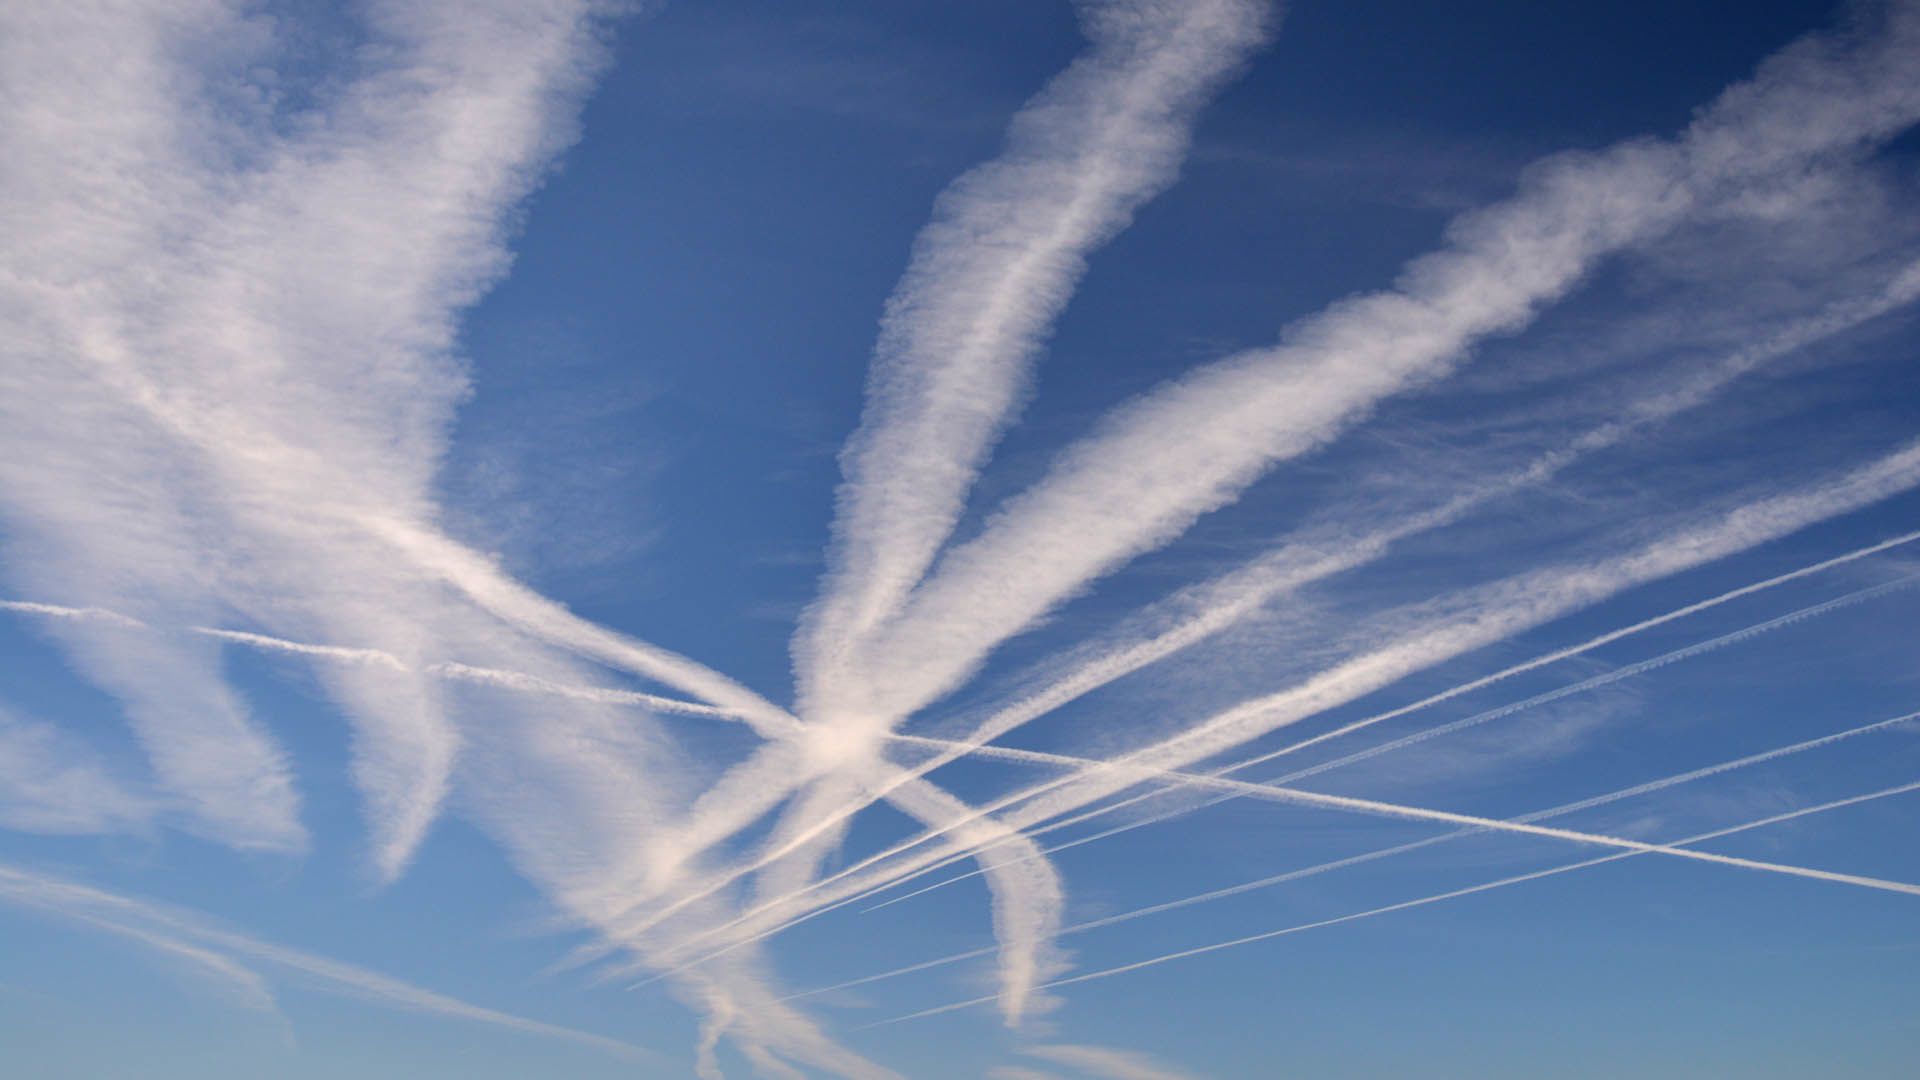 Aeroplane trails in sky